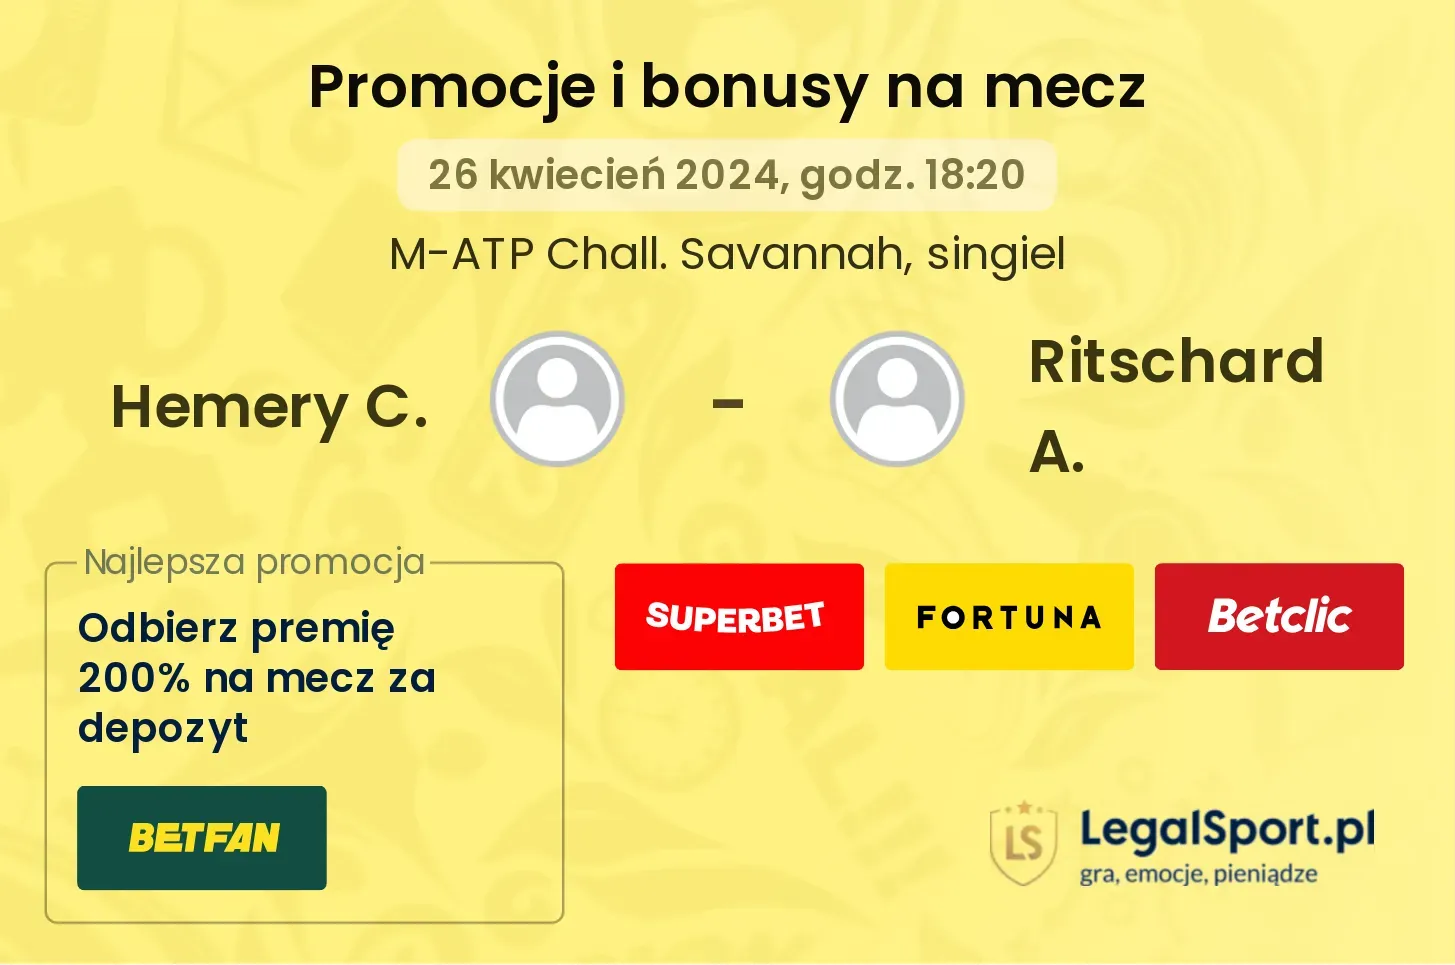 Hemery C. - Ritschard A. promocje bonusy na mecz